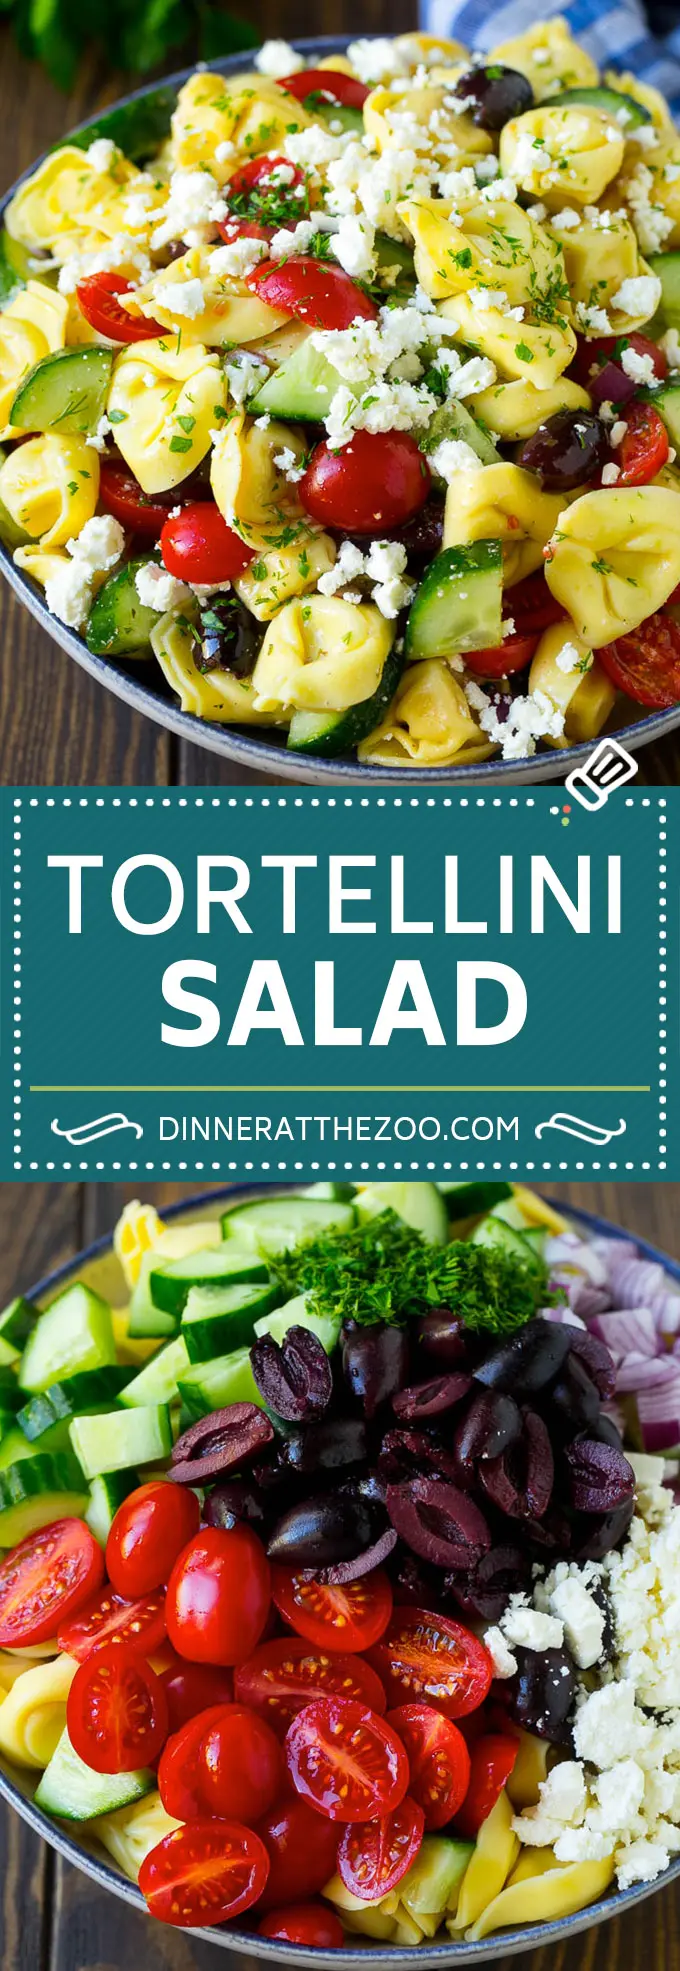 Réception de la salade de tortellini grecque | Salade de pâtes | Salade de tortellini | Salade grecque #grecque #tortellini #pasta #salade #concombres #olives #dinner #dinneratthezoo